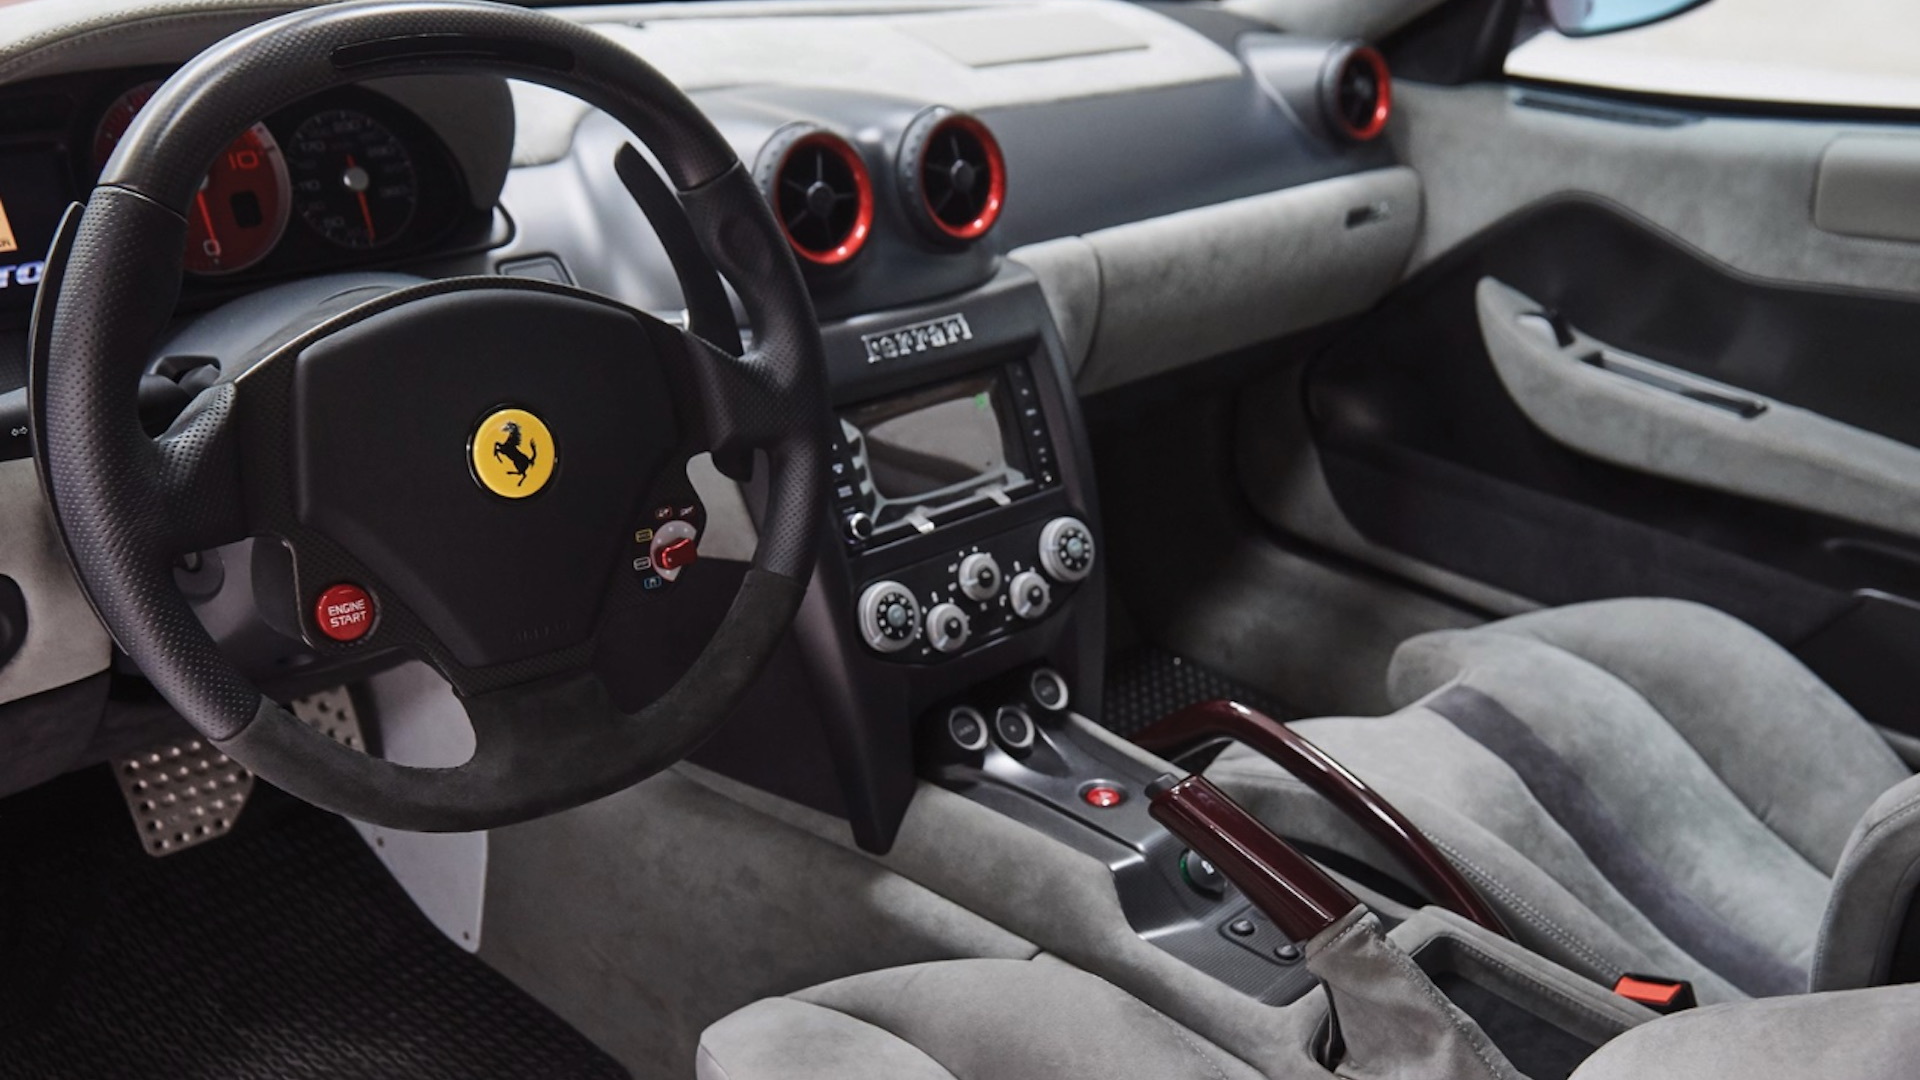 2011 Ferrari SP30 heading to auction, via RM Sothby's